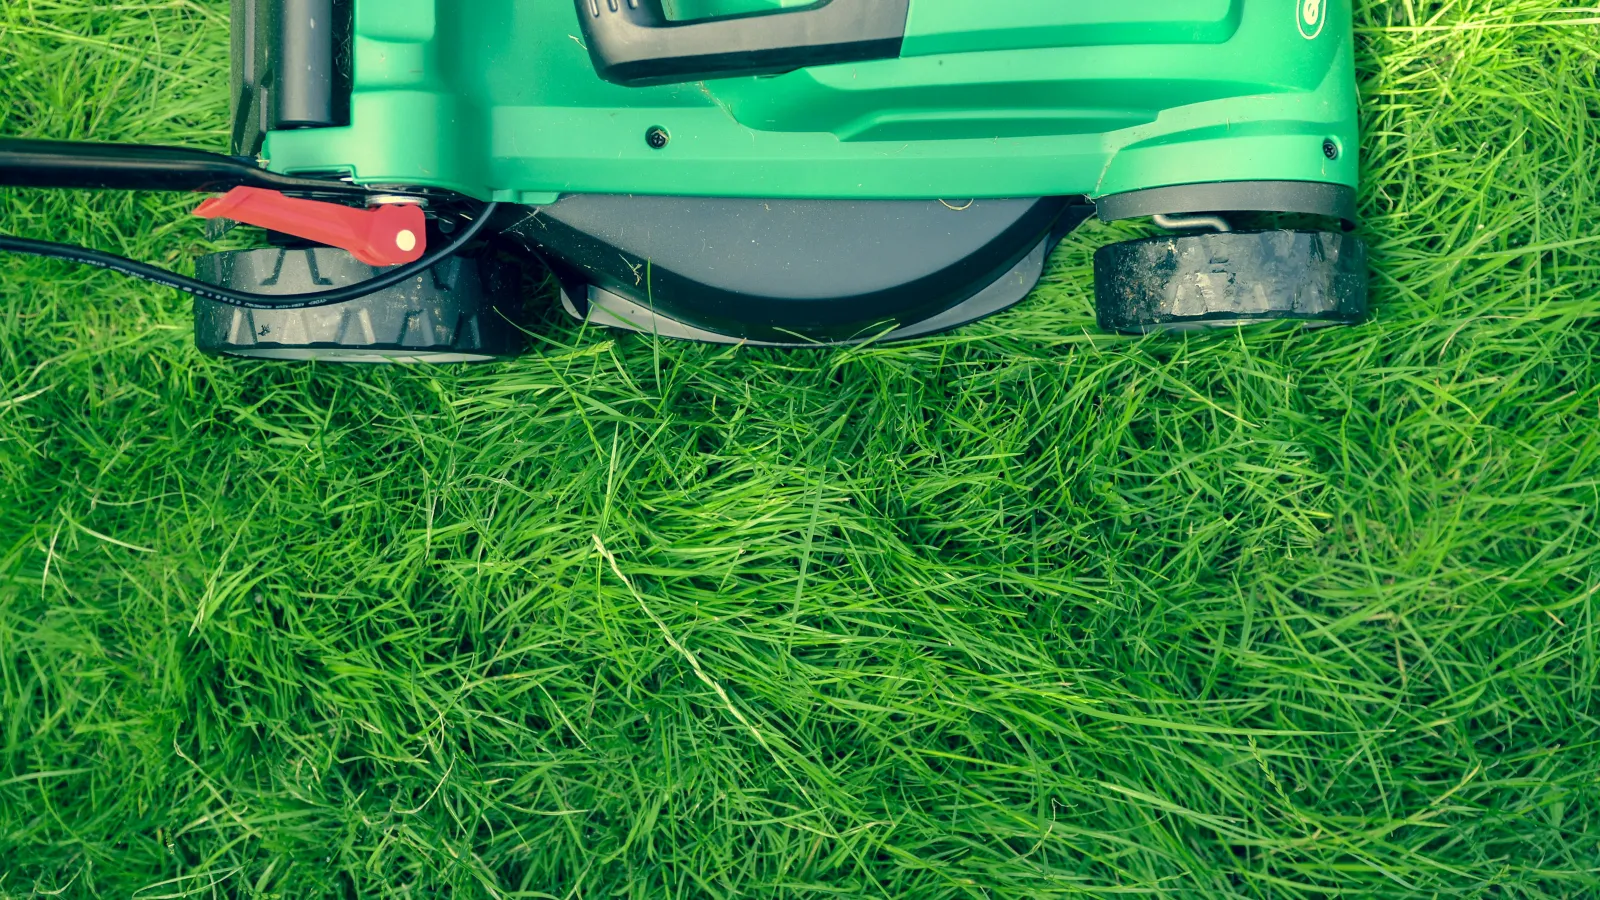 a green lawnmower on grass